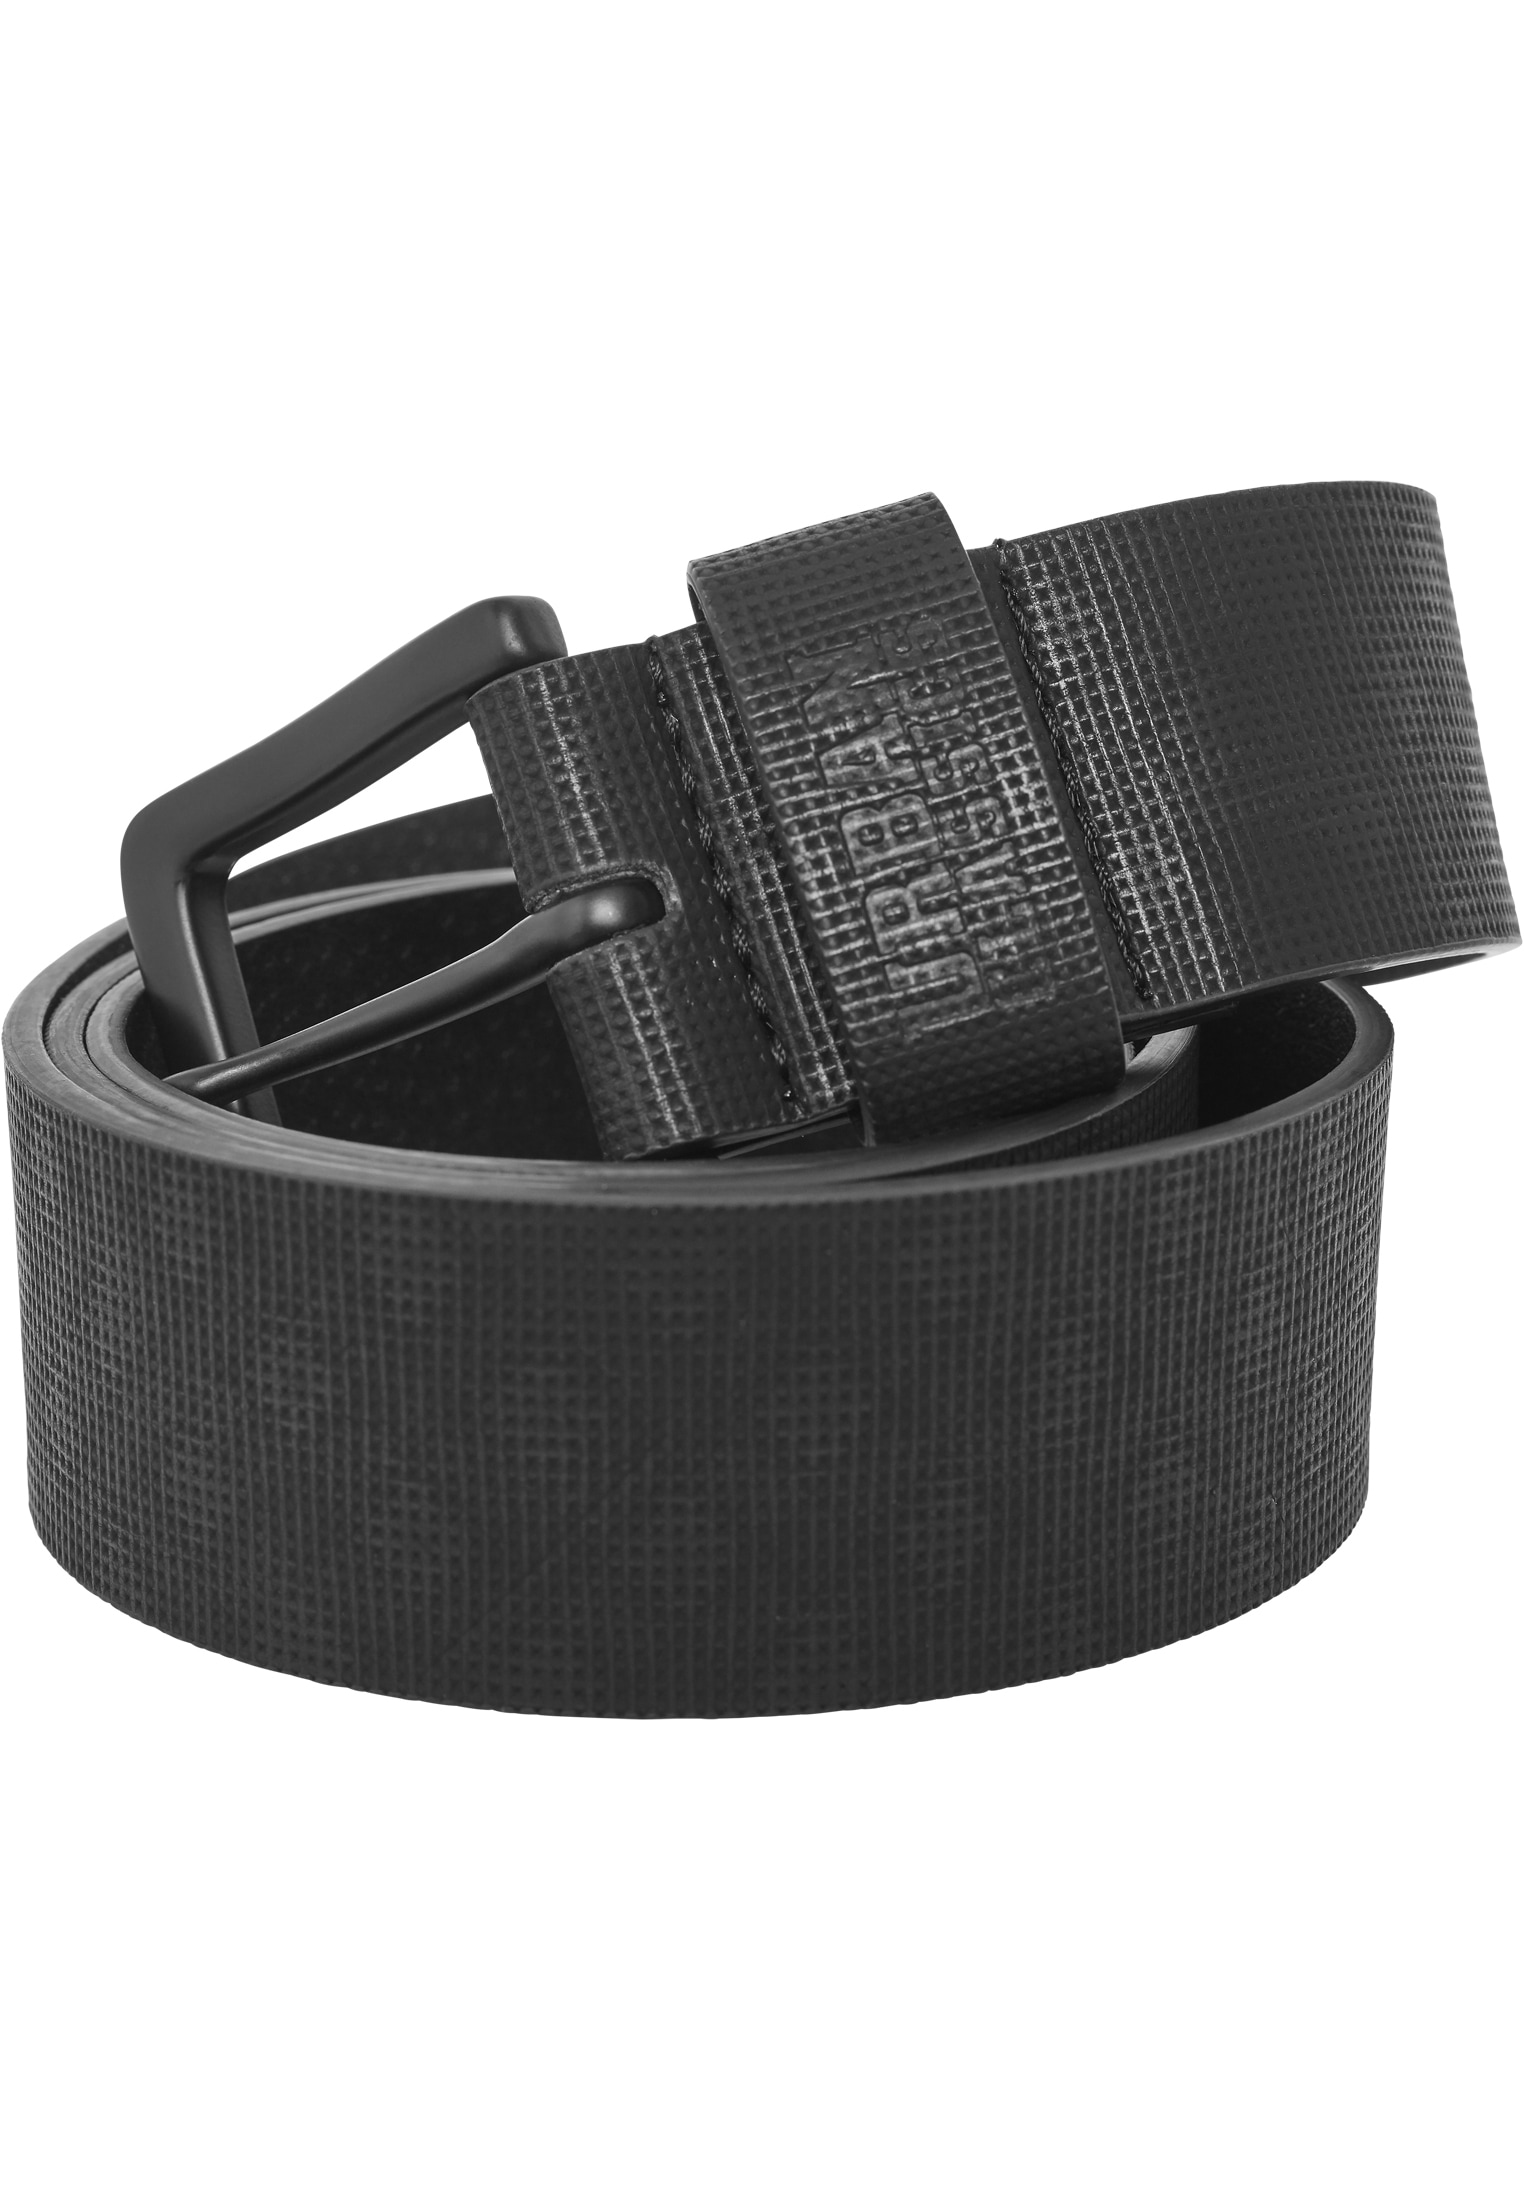 URBAN CLASSICS BAUR | kaufen »Accessoires Leather Belt« Fake Hüftgürtel